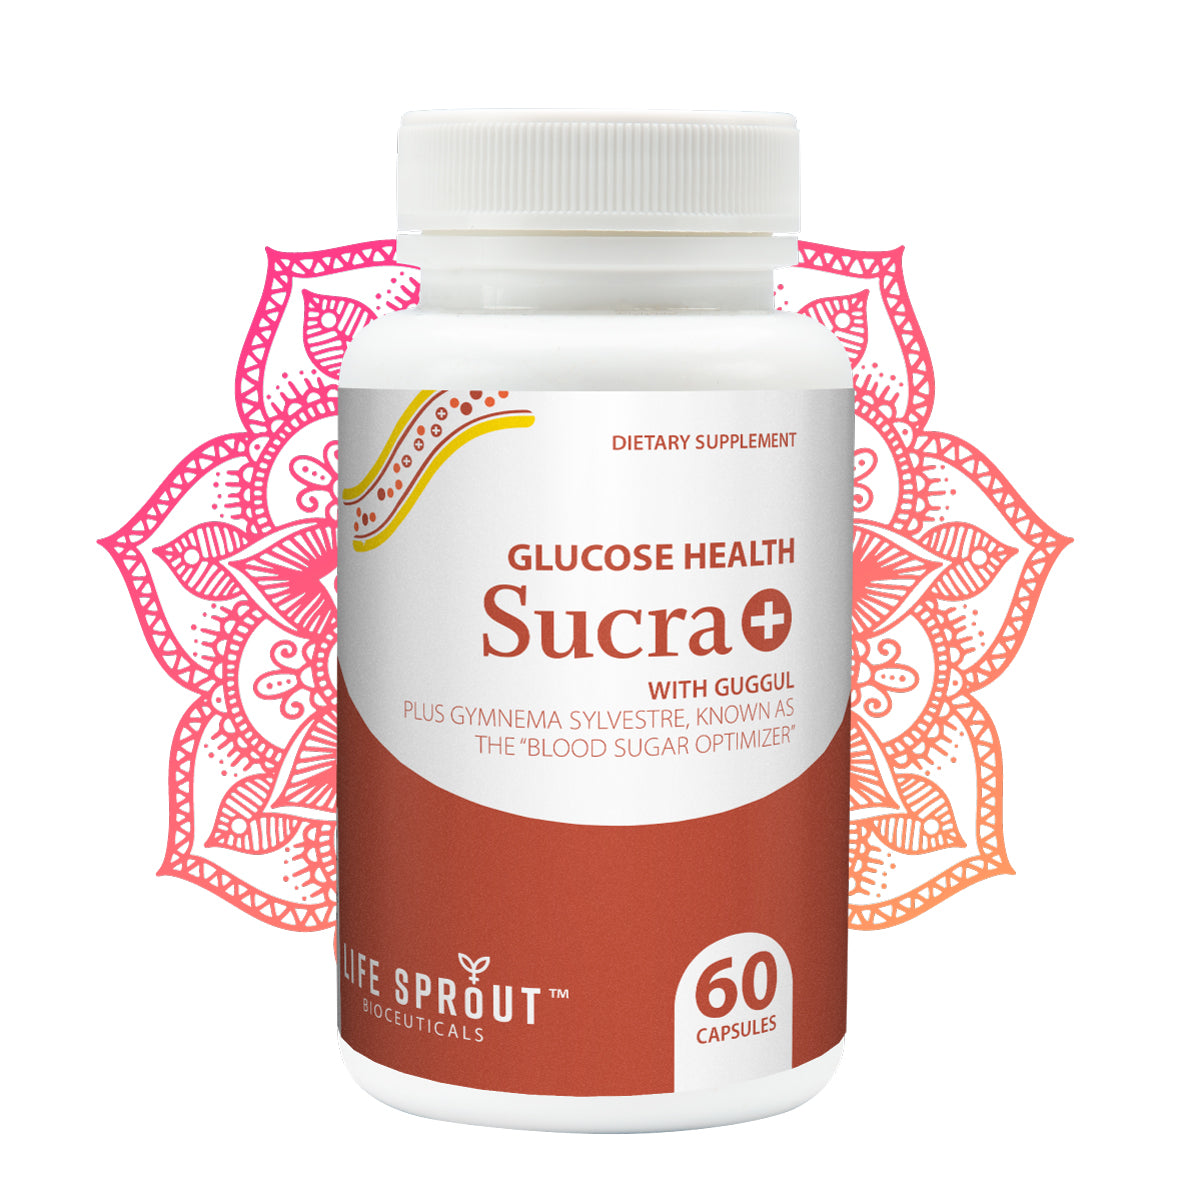 Sucra + for Blood Glucose Management